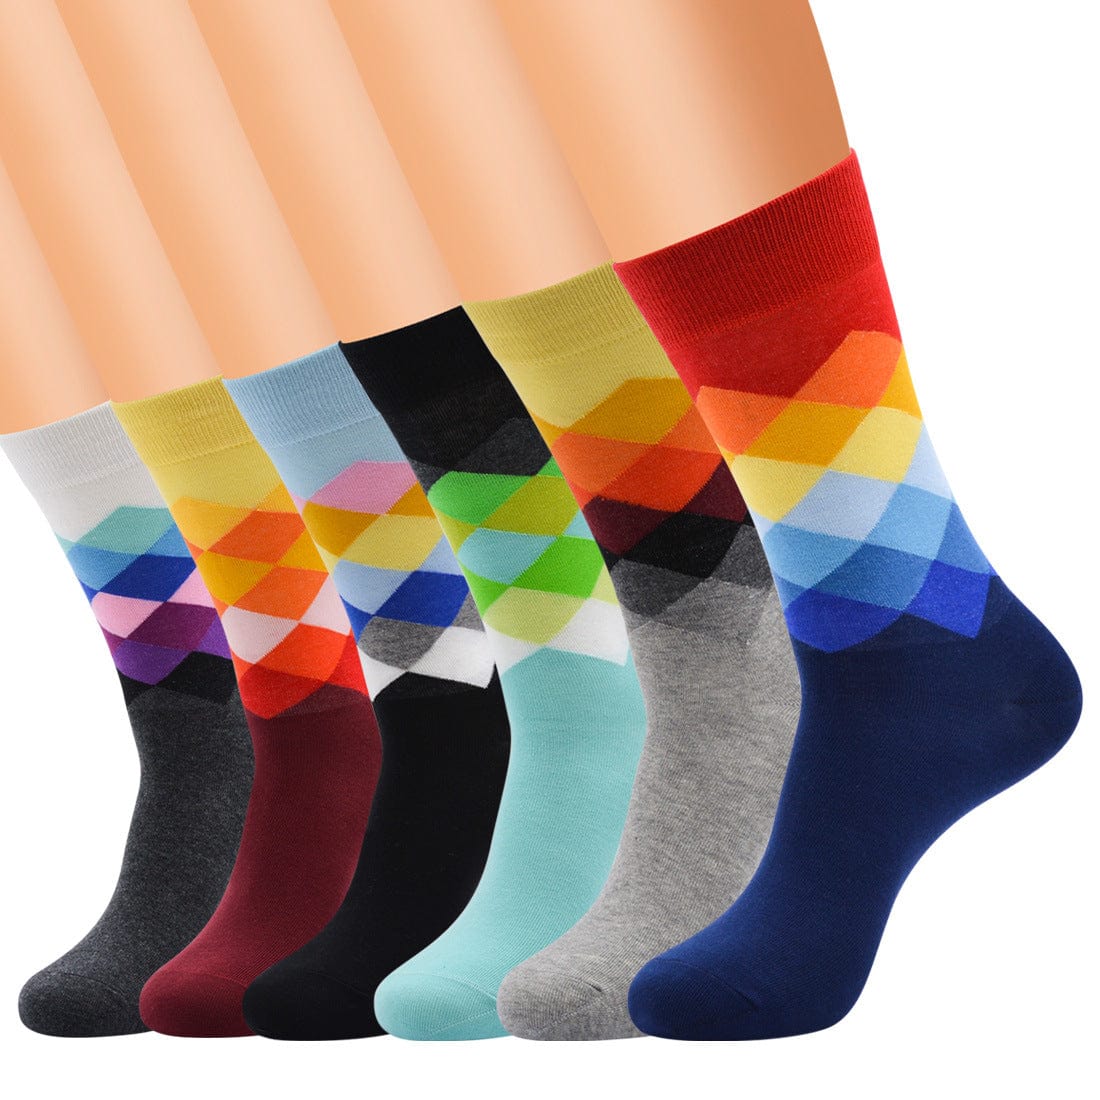 men's and women's diamonds colorful socks dimenxions flashlander left side pair